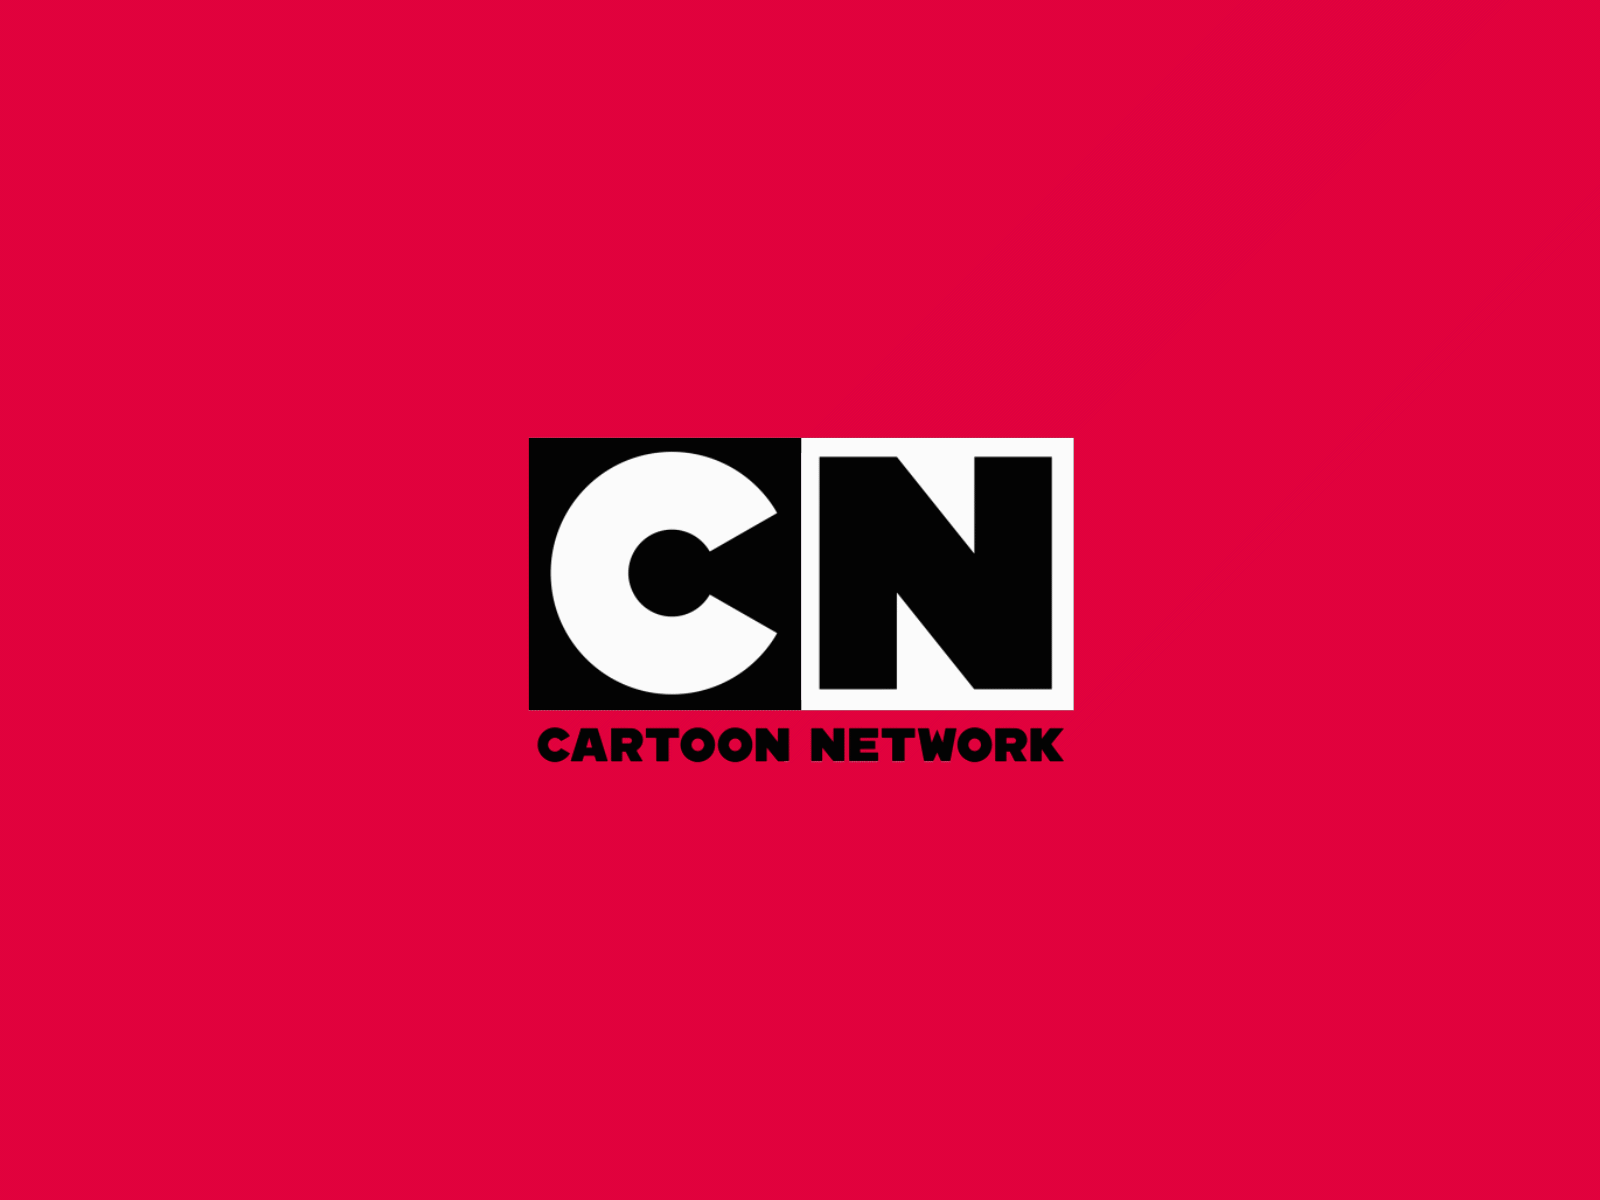 Cartoon Network Logo animation Version 2 by Hazik Maqsood on Dribbble